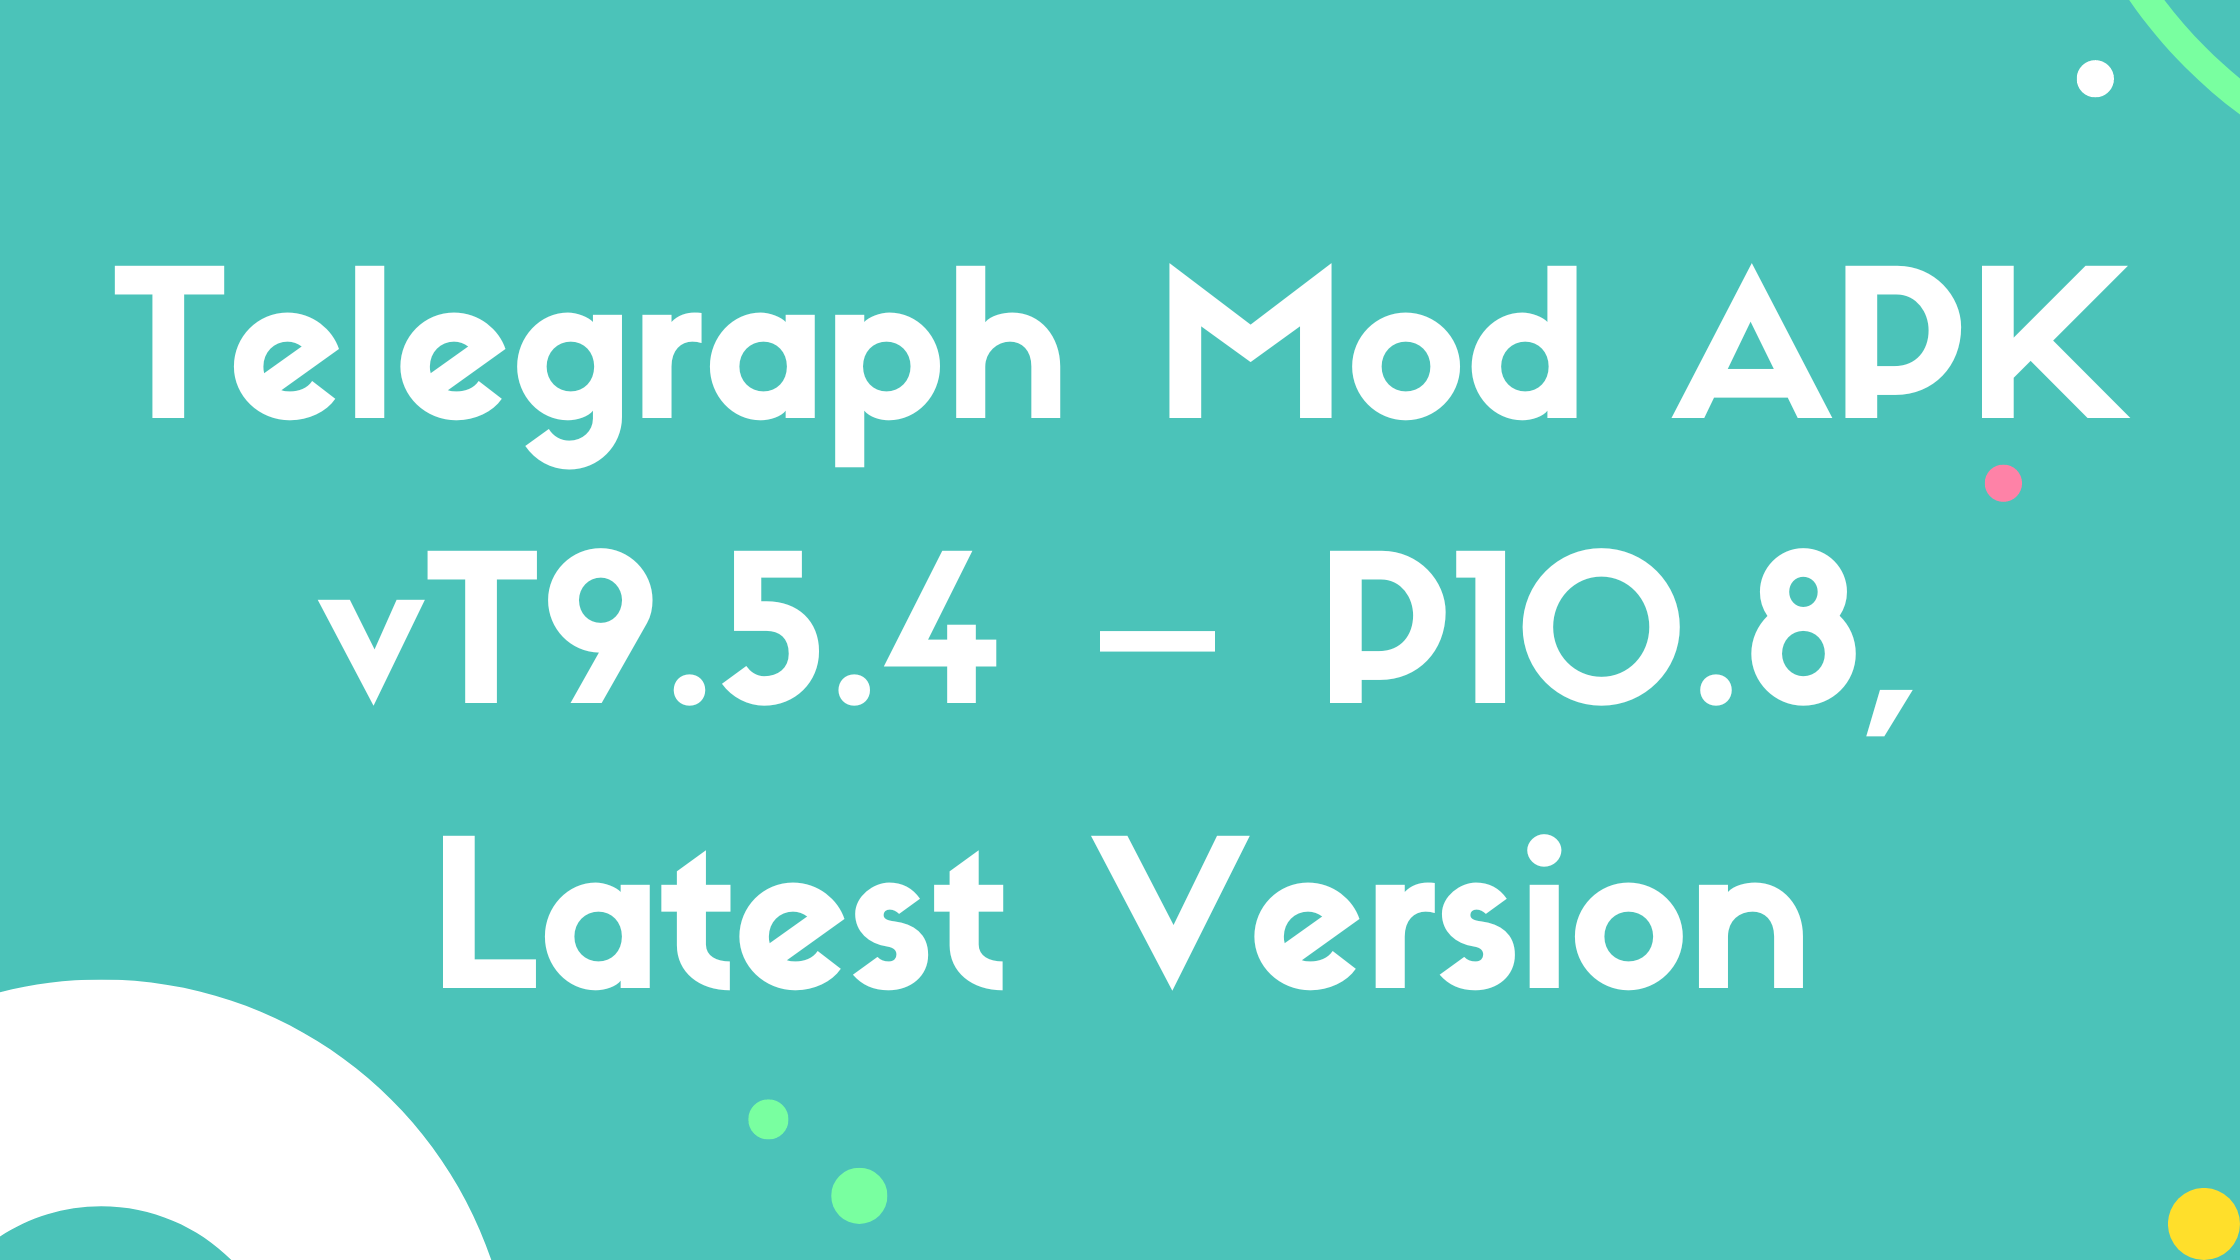 Telegraph Mod APK vT9.5.4 – P10.8, Latest Version